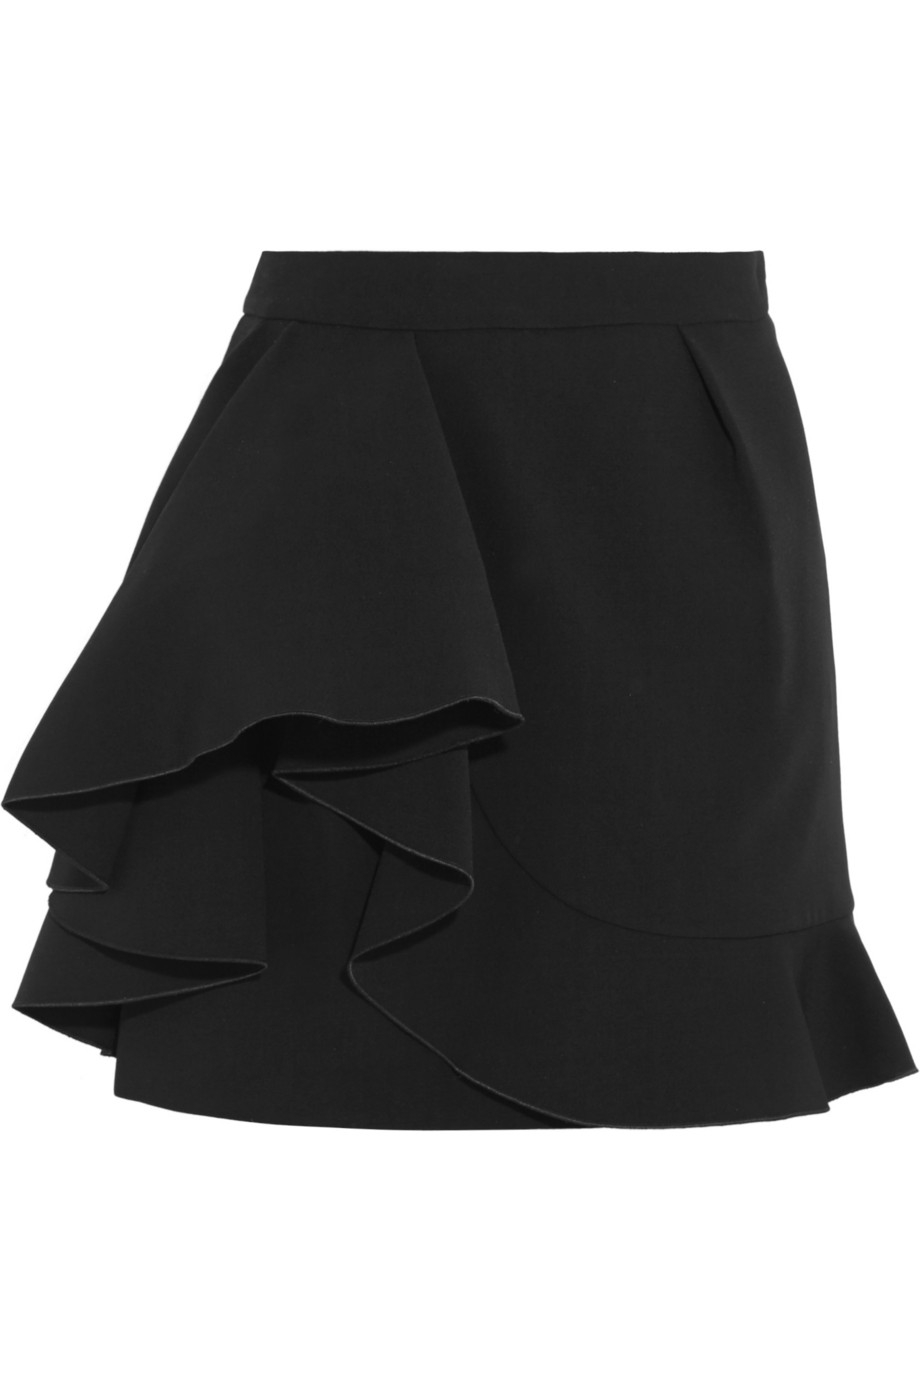 Lyst - Miu Miu Ruffled Crepe Mini Skirt in Black